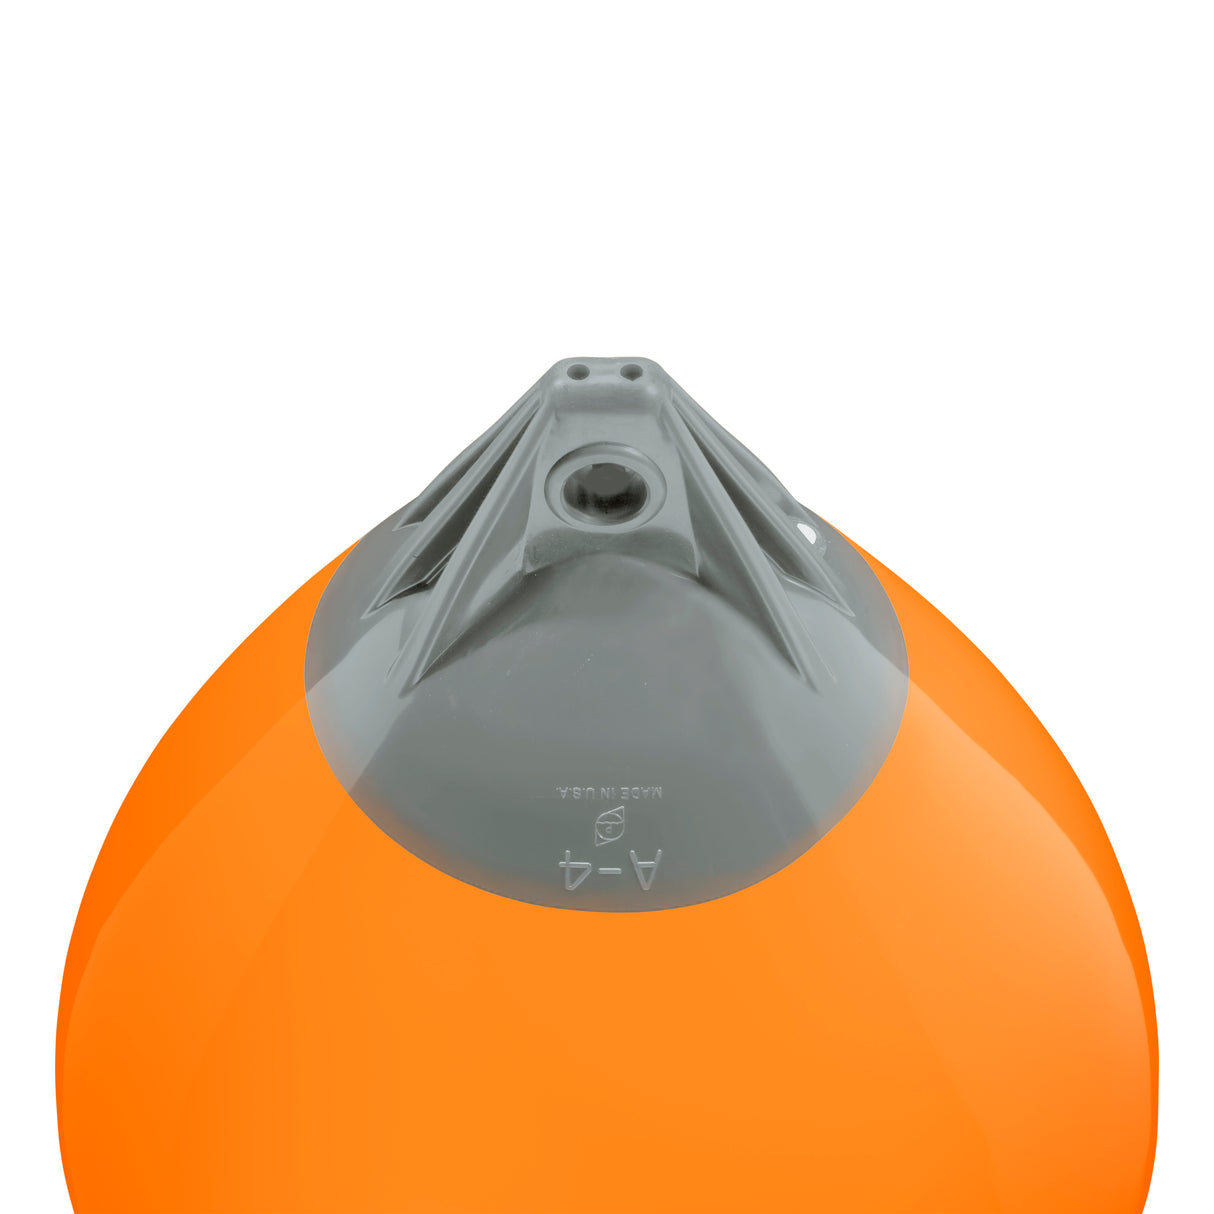 Orange buoy with Grey-Top, Polyform A-4 angled shot